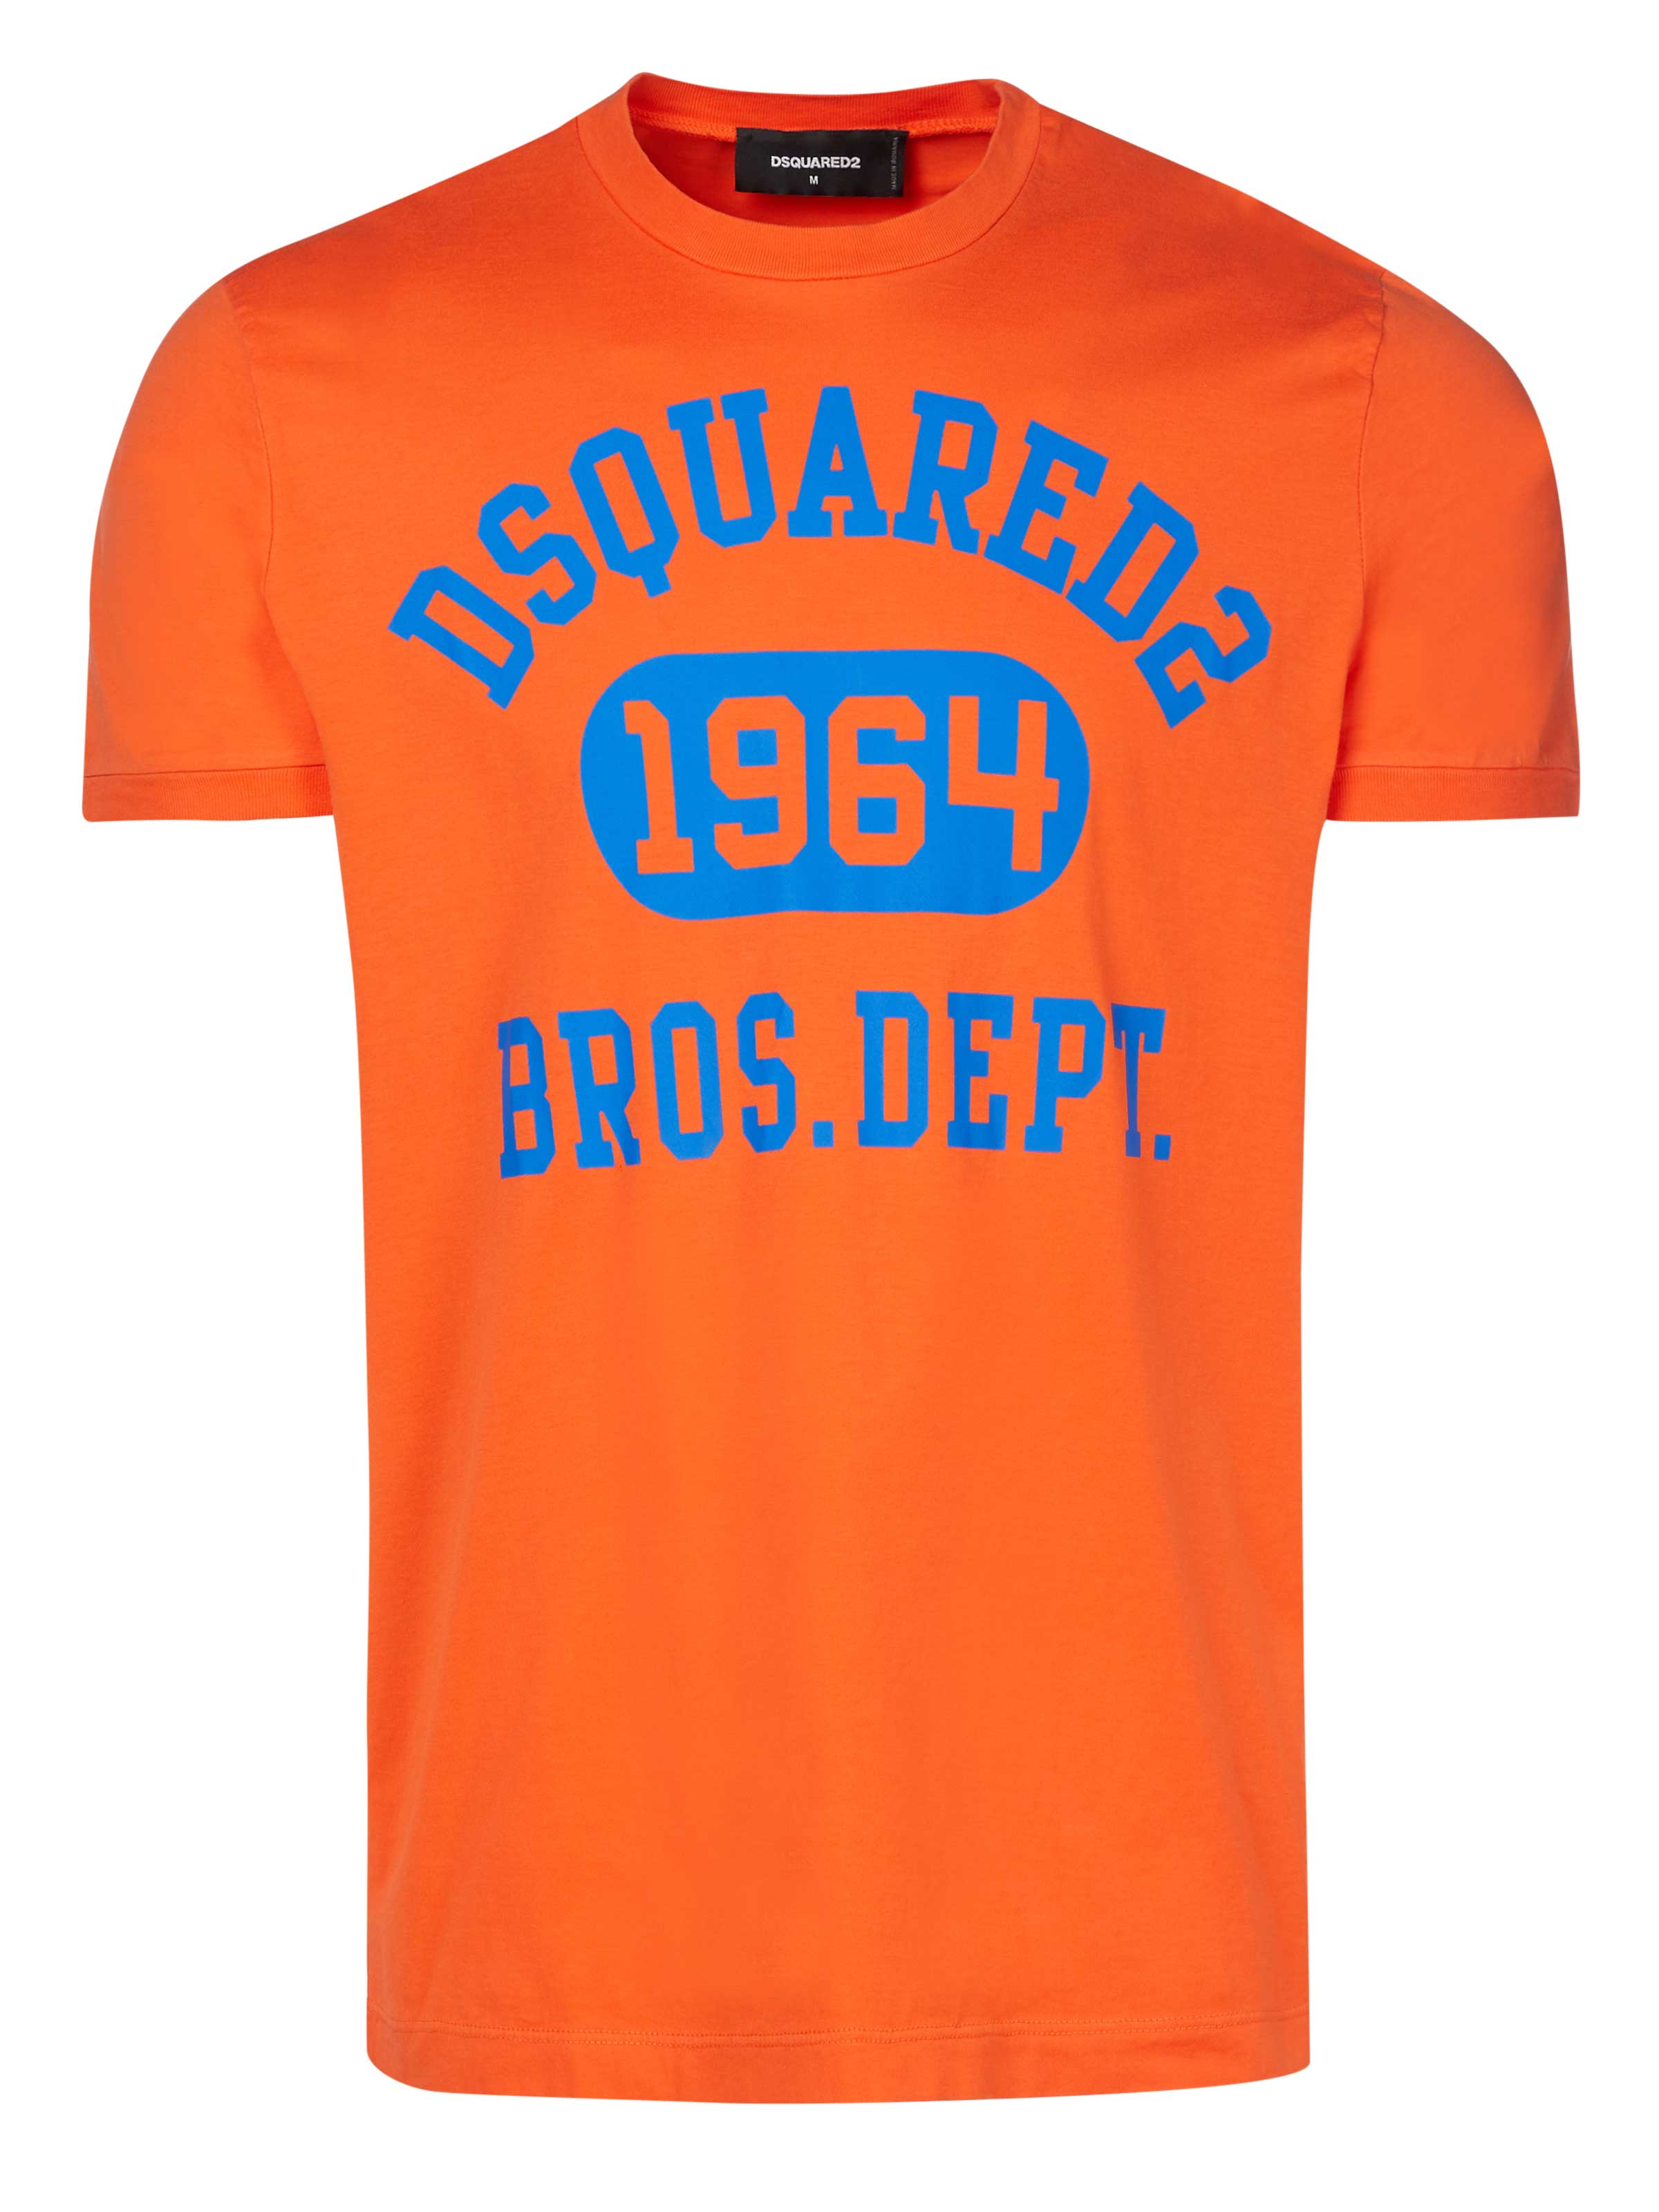 orange dsquared t shirt